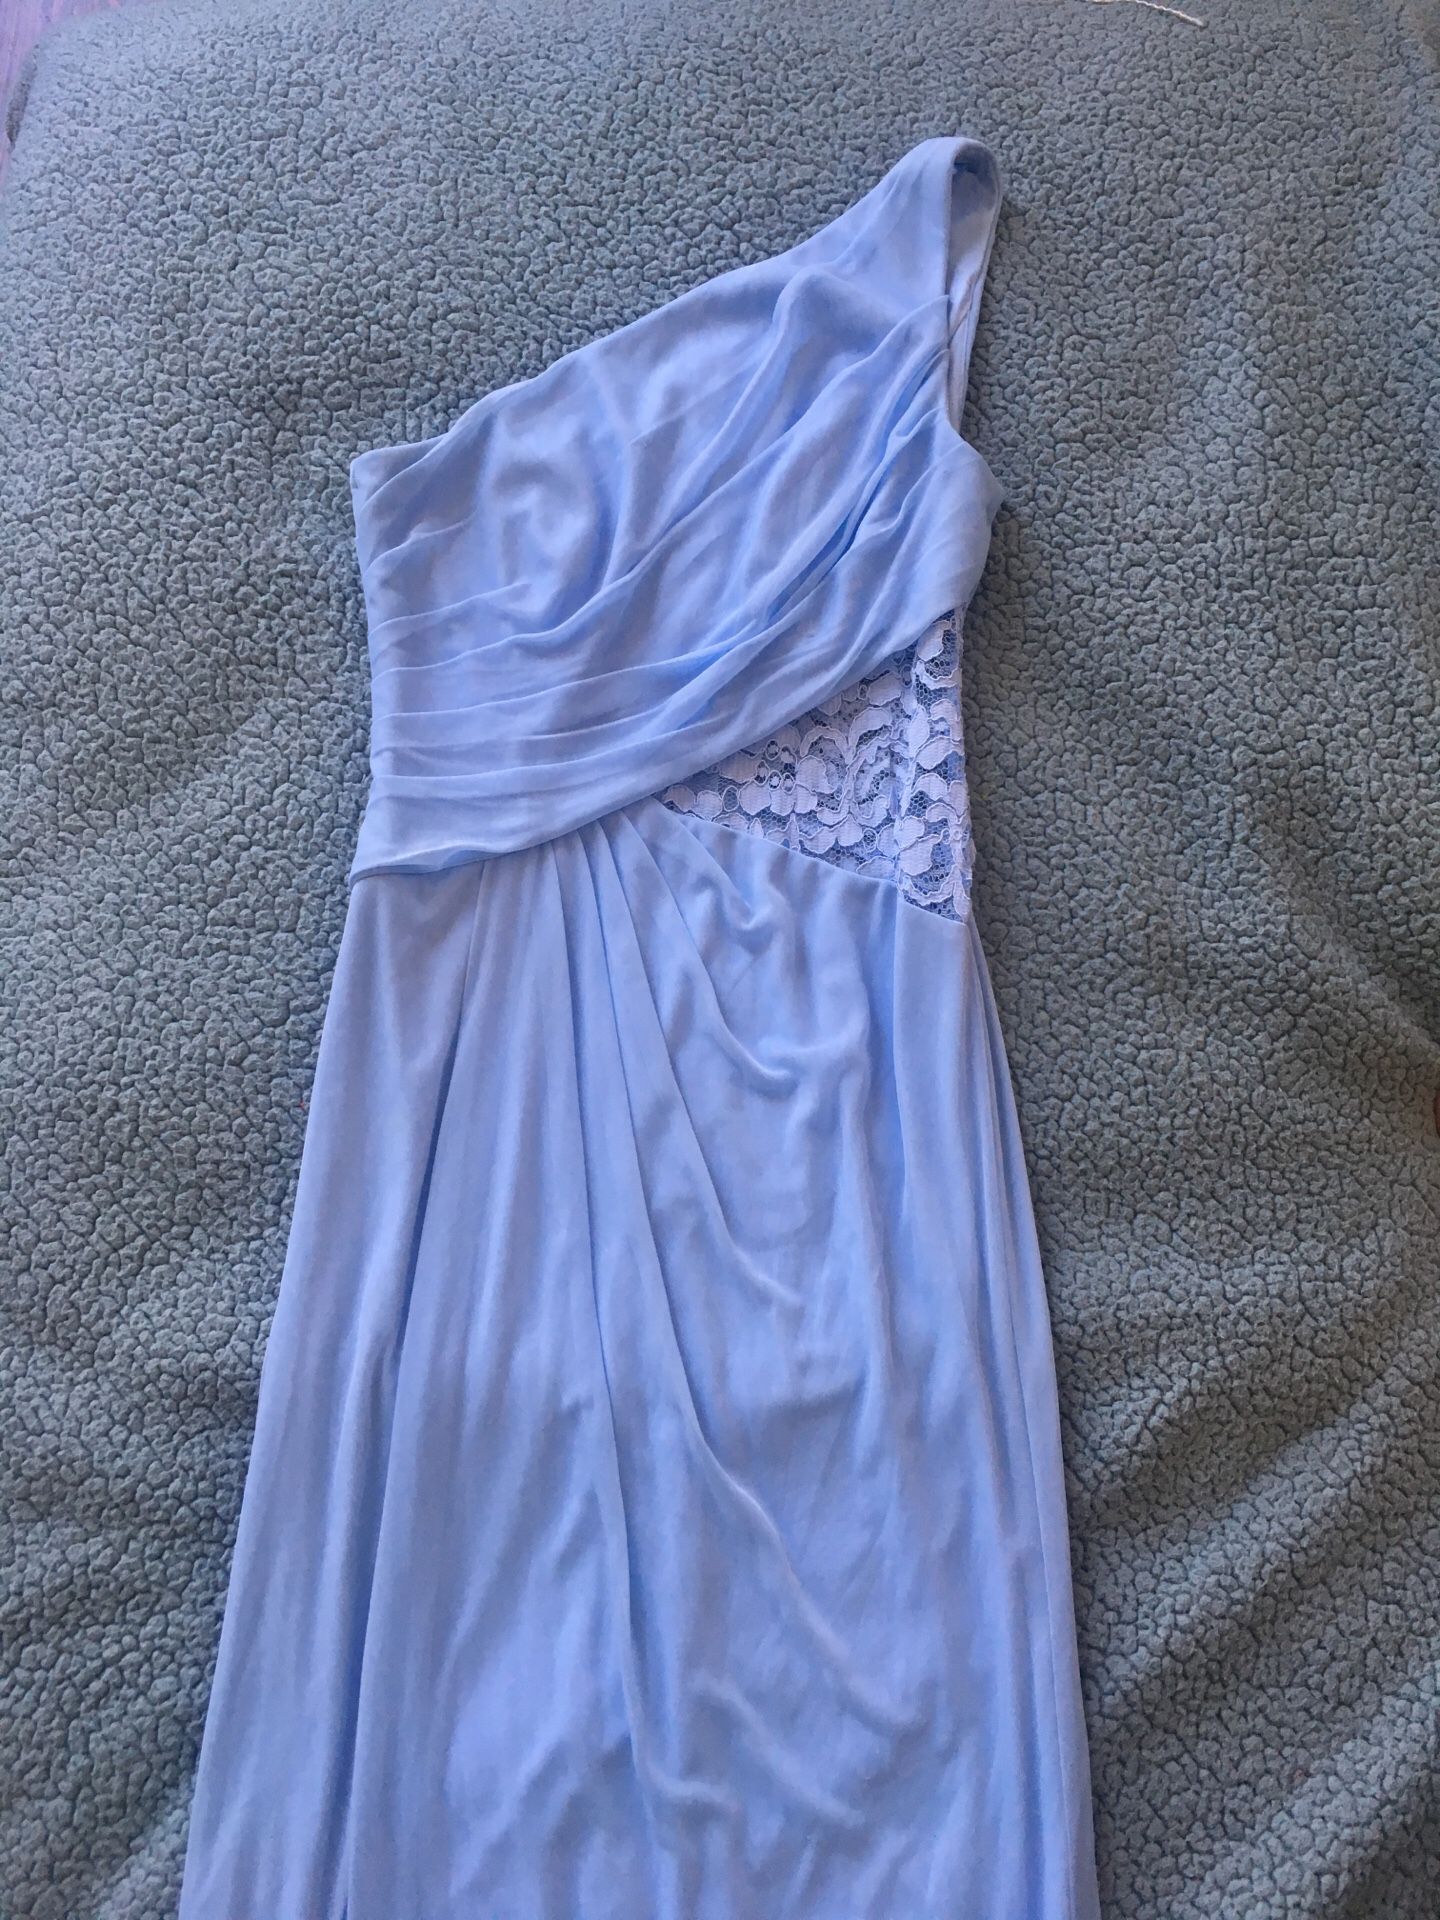 David’s Bridal blue bridesmaid/formal dress